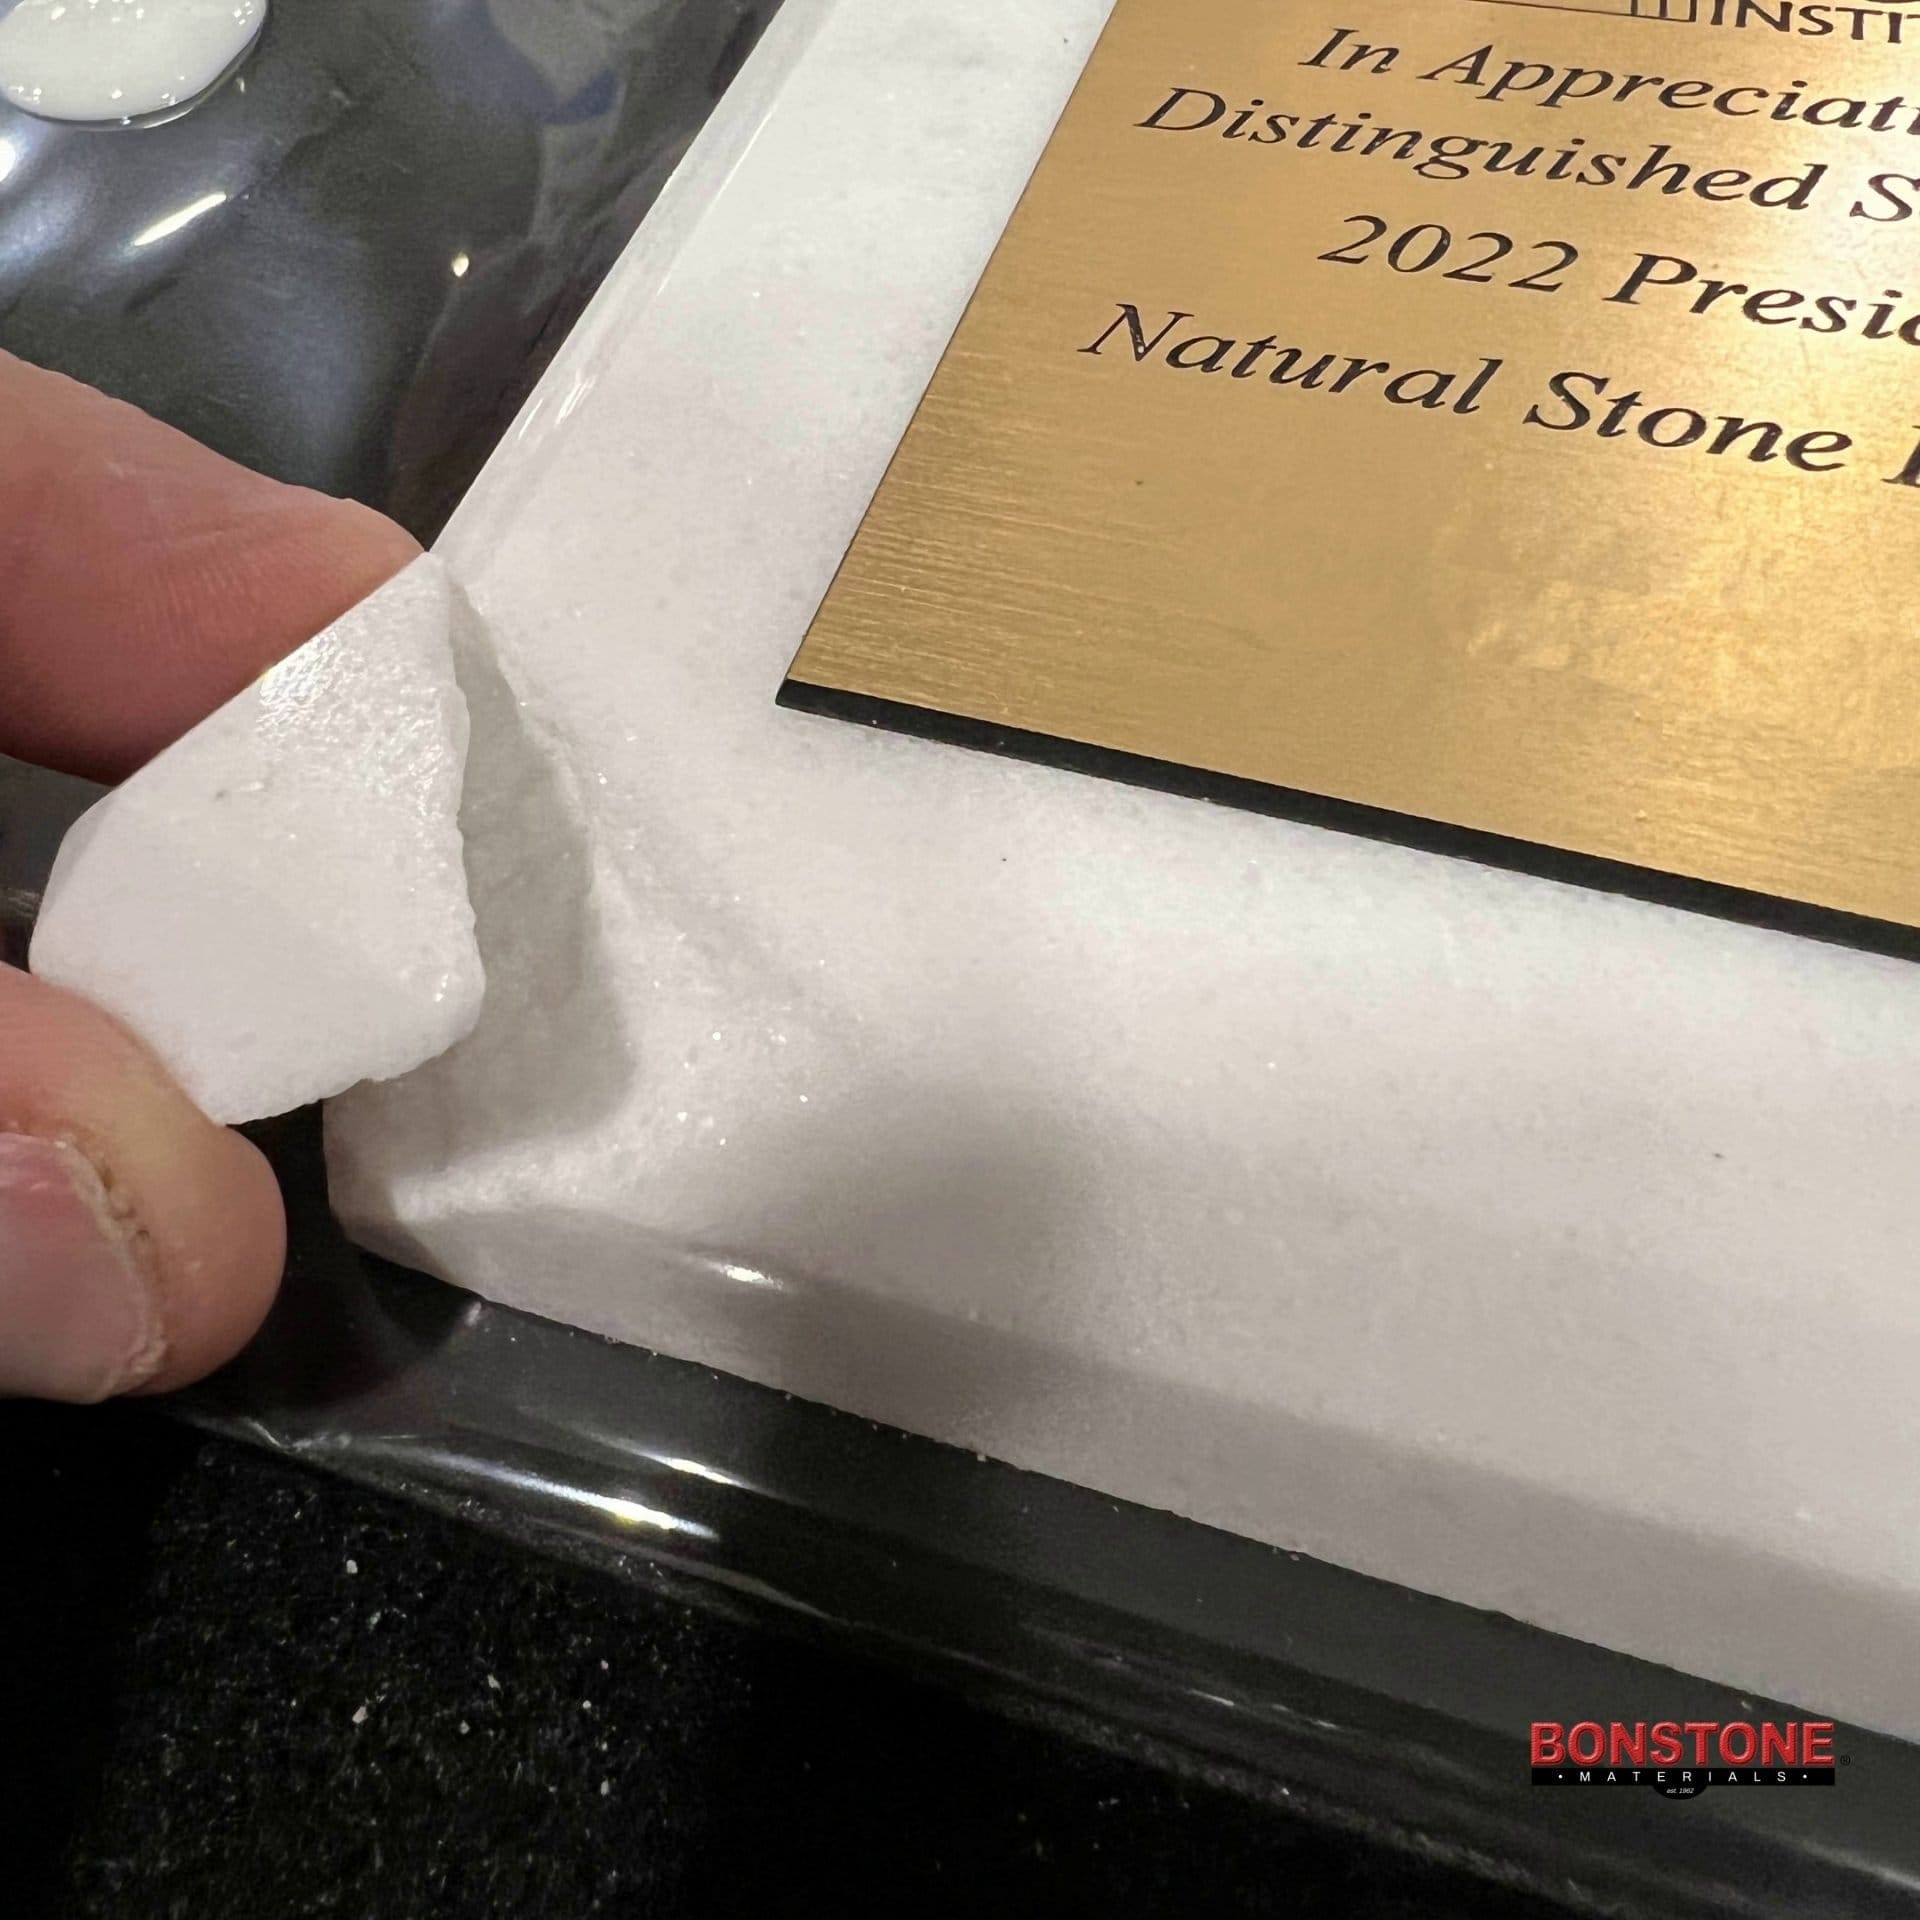 Bonstone Granite & Marble Repair Kit Fix Chips Scratches Breaks